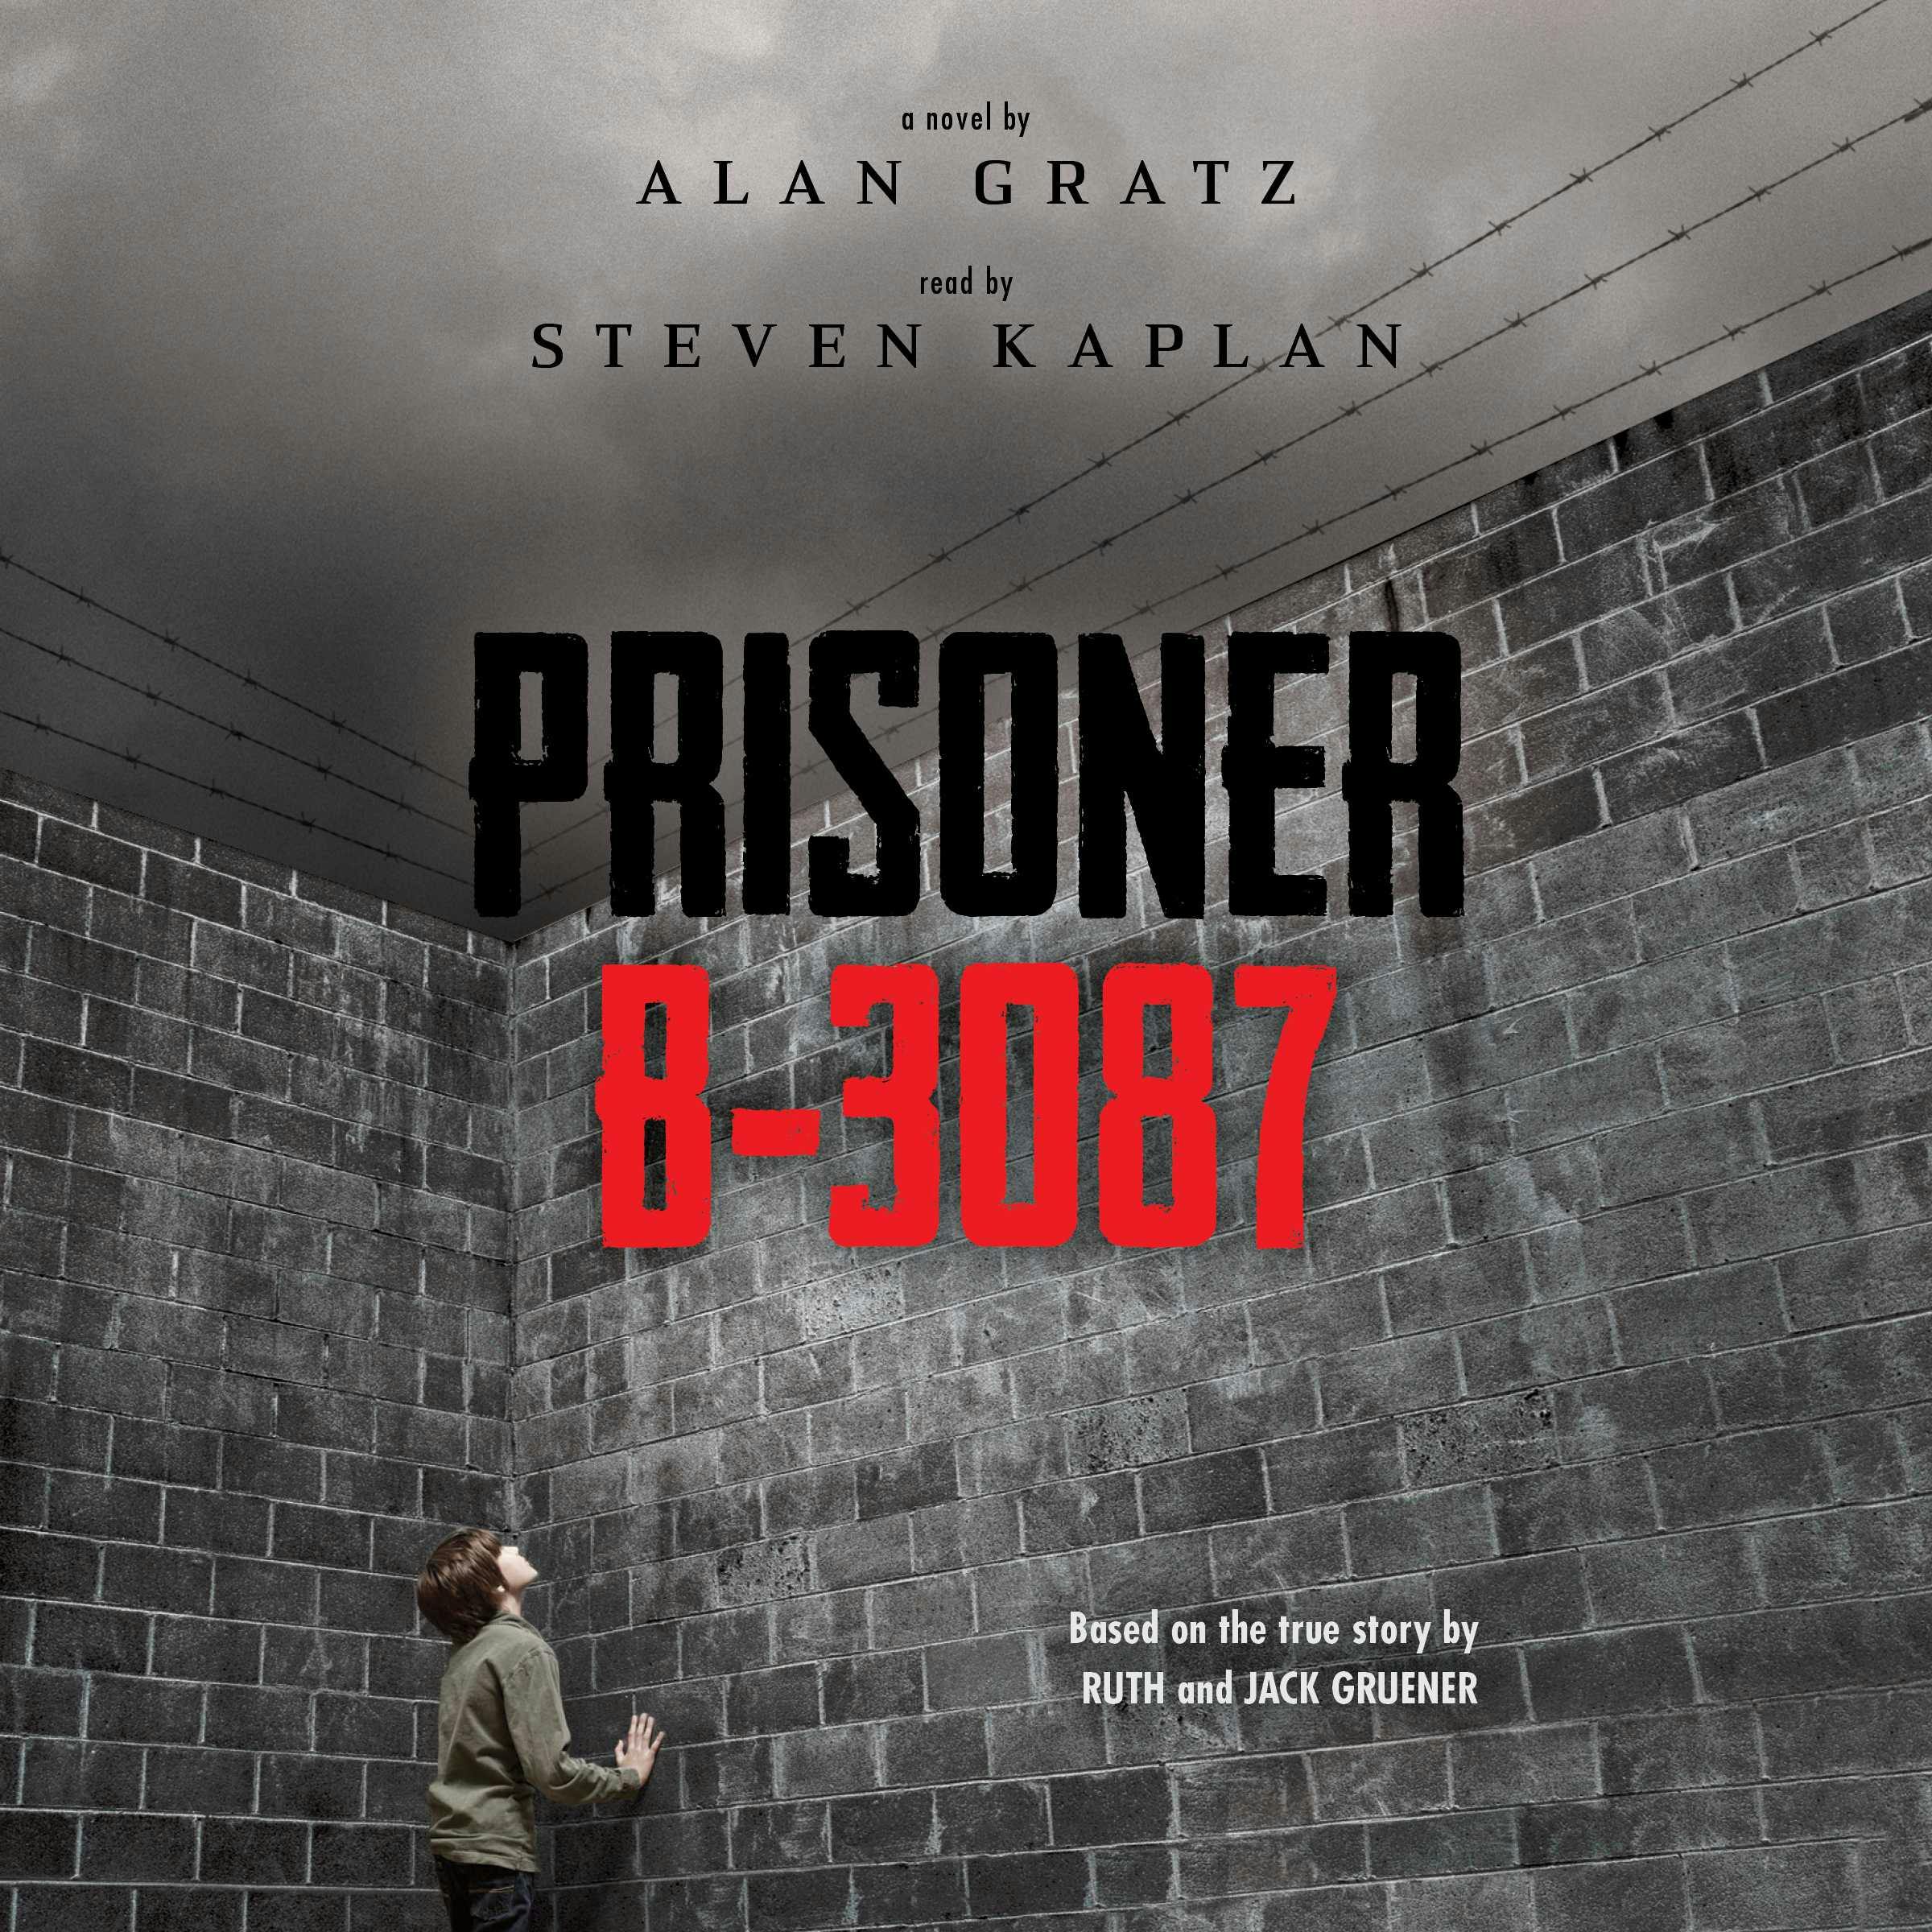 Prisoner B-3087 - Alan Gratz